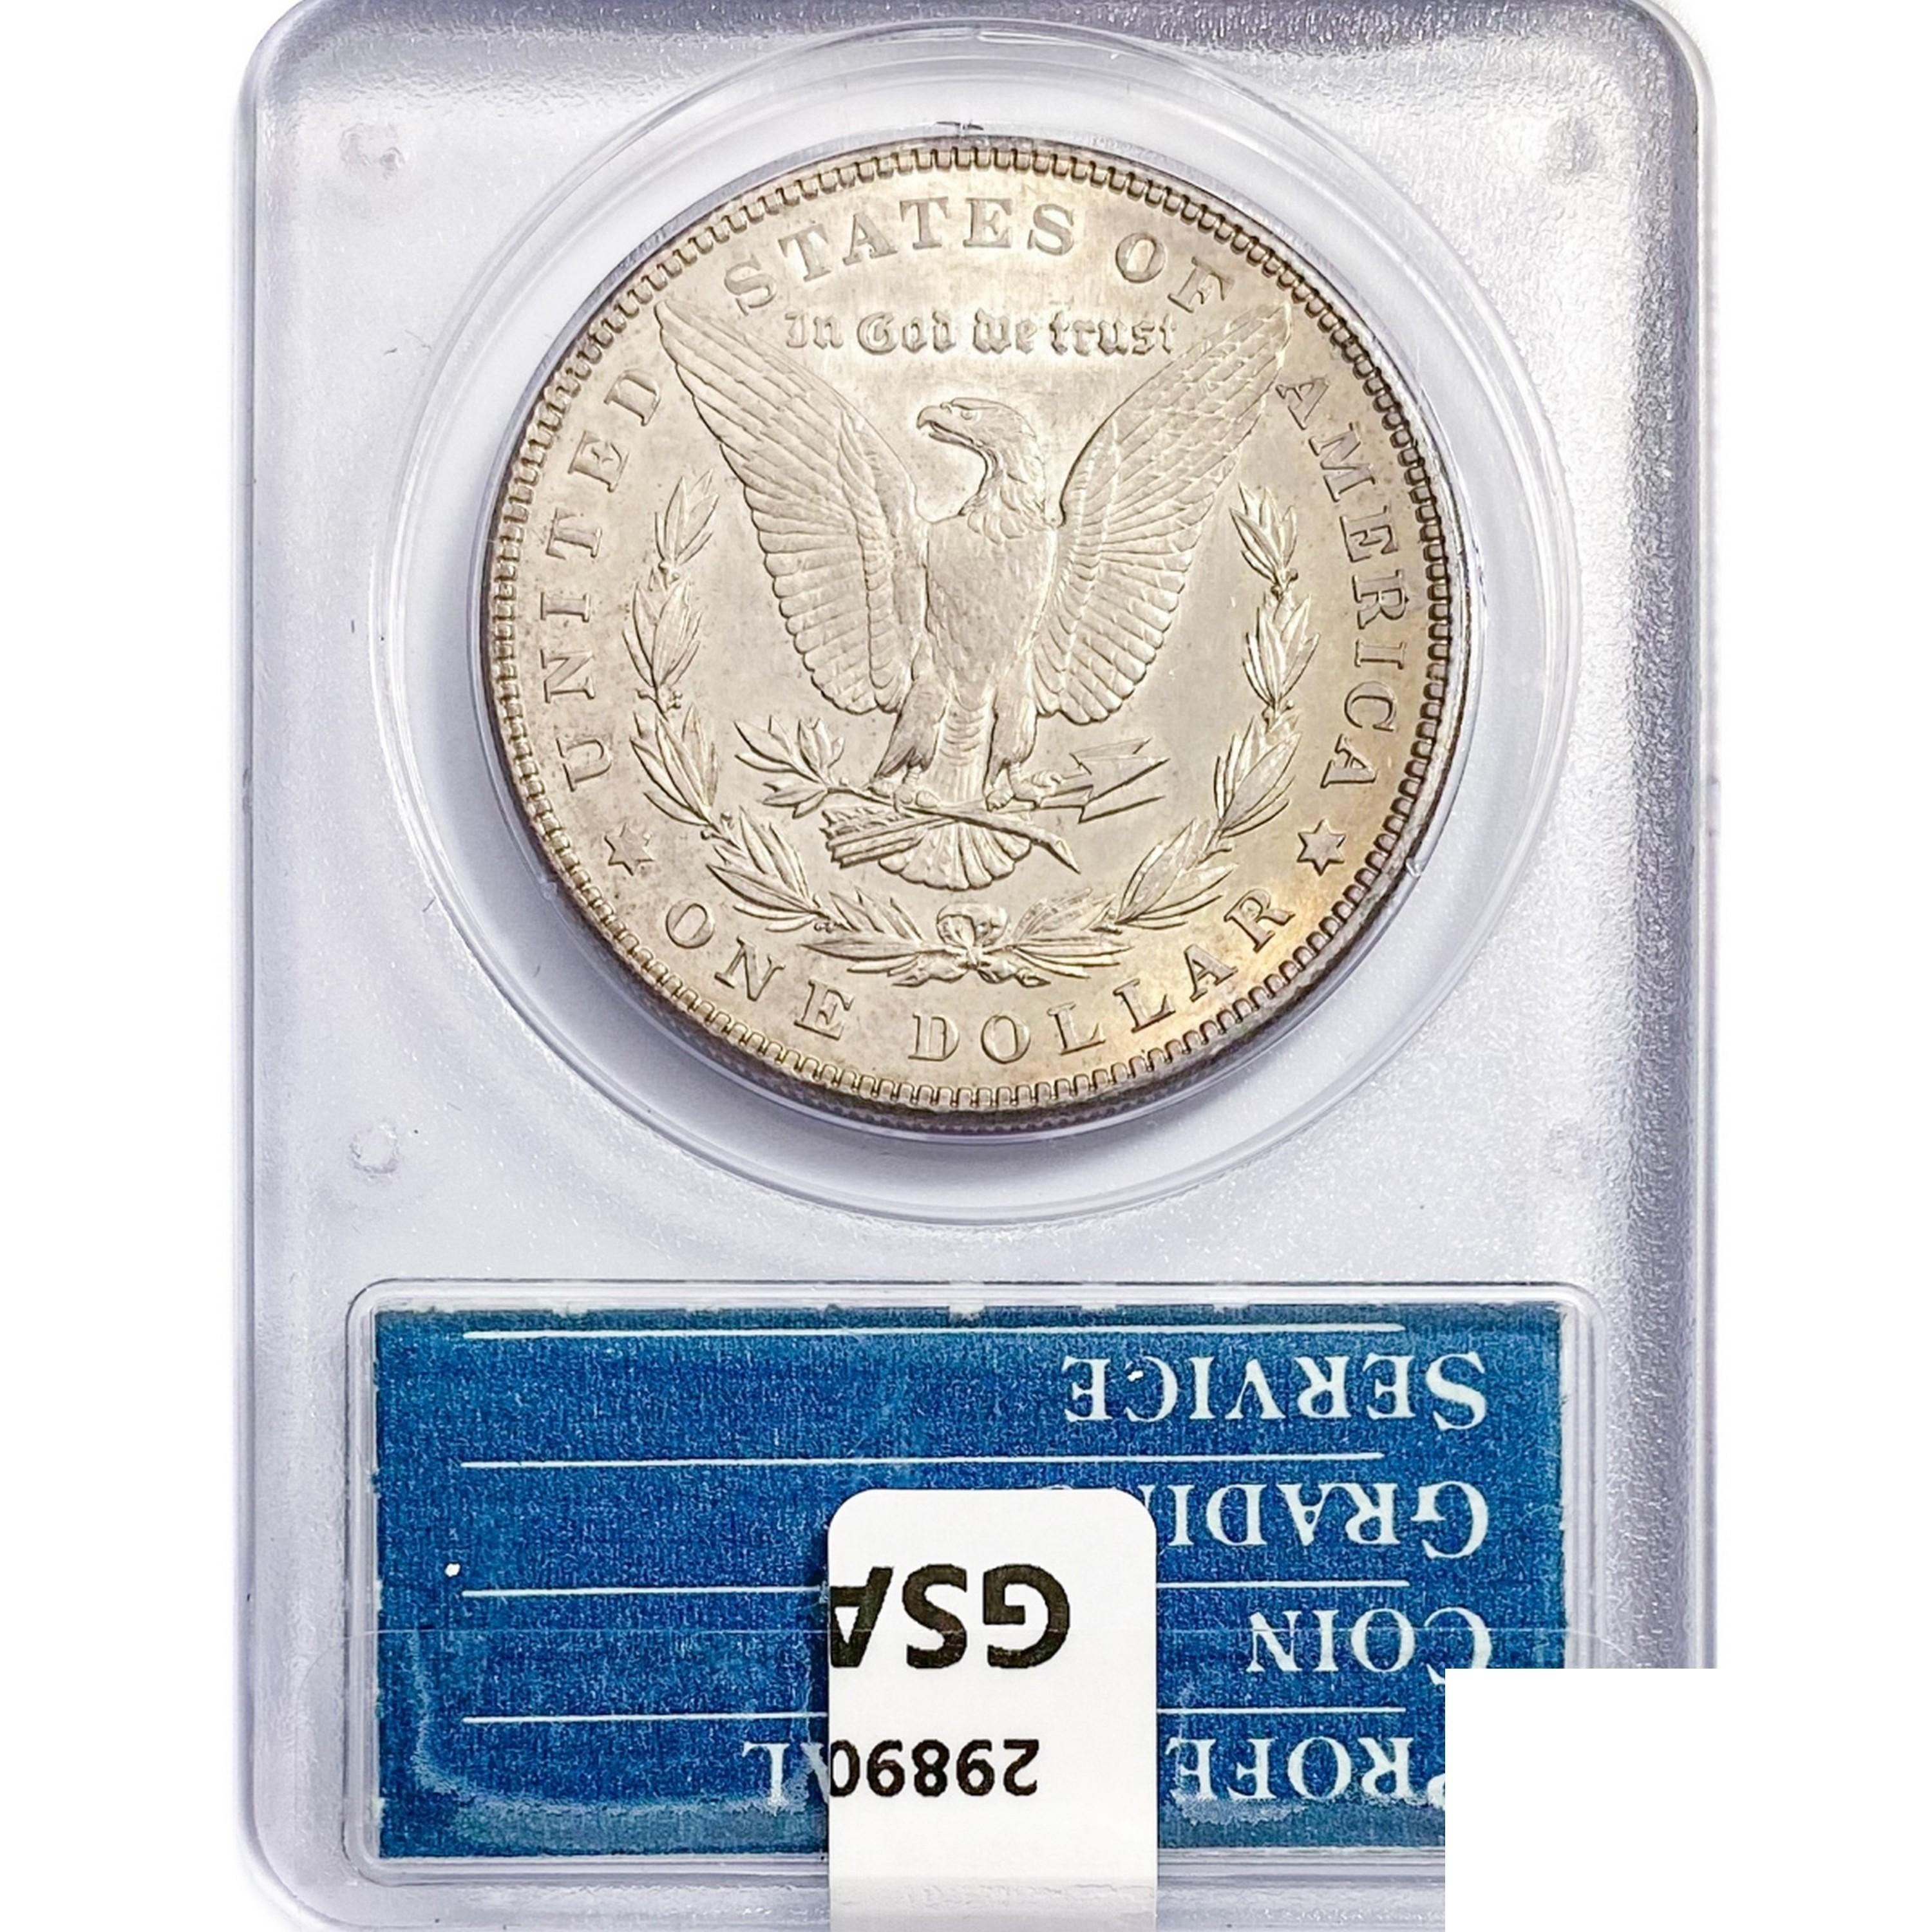 1902 Morgan Silver Dollar PCGS MS63